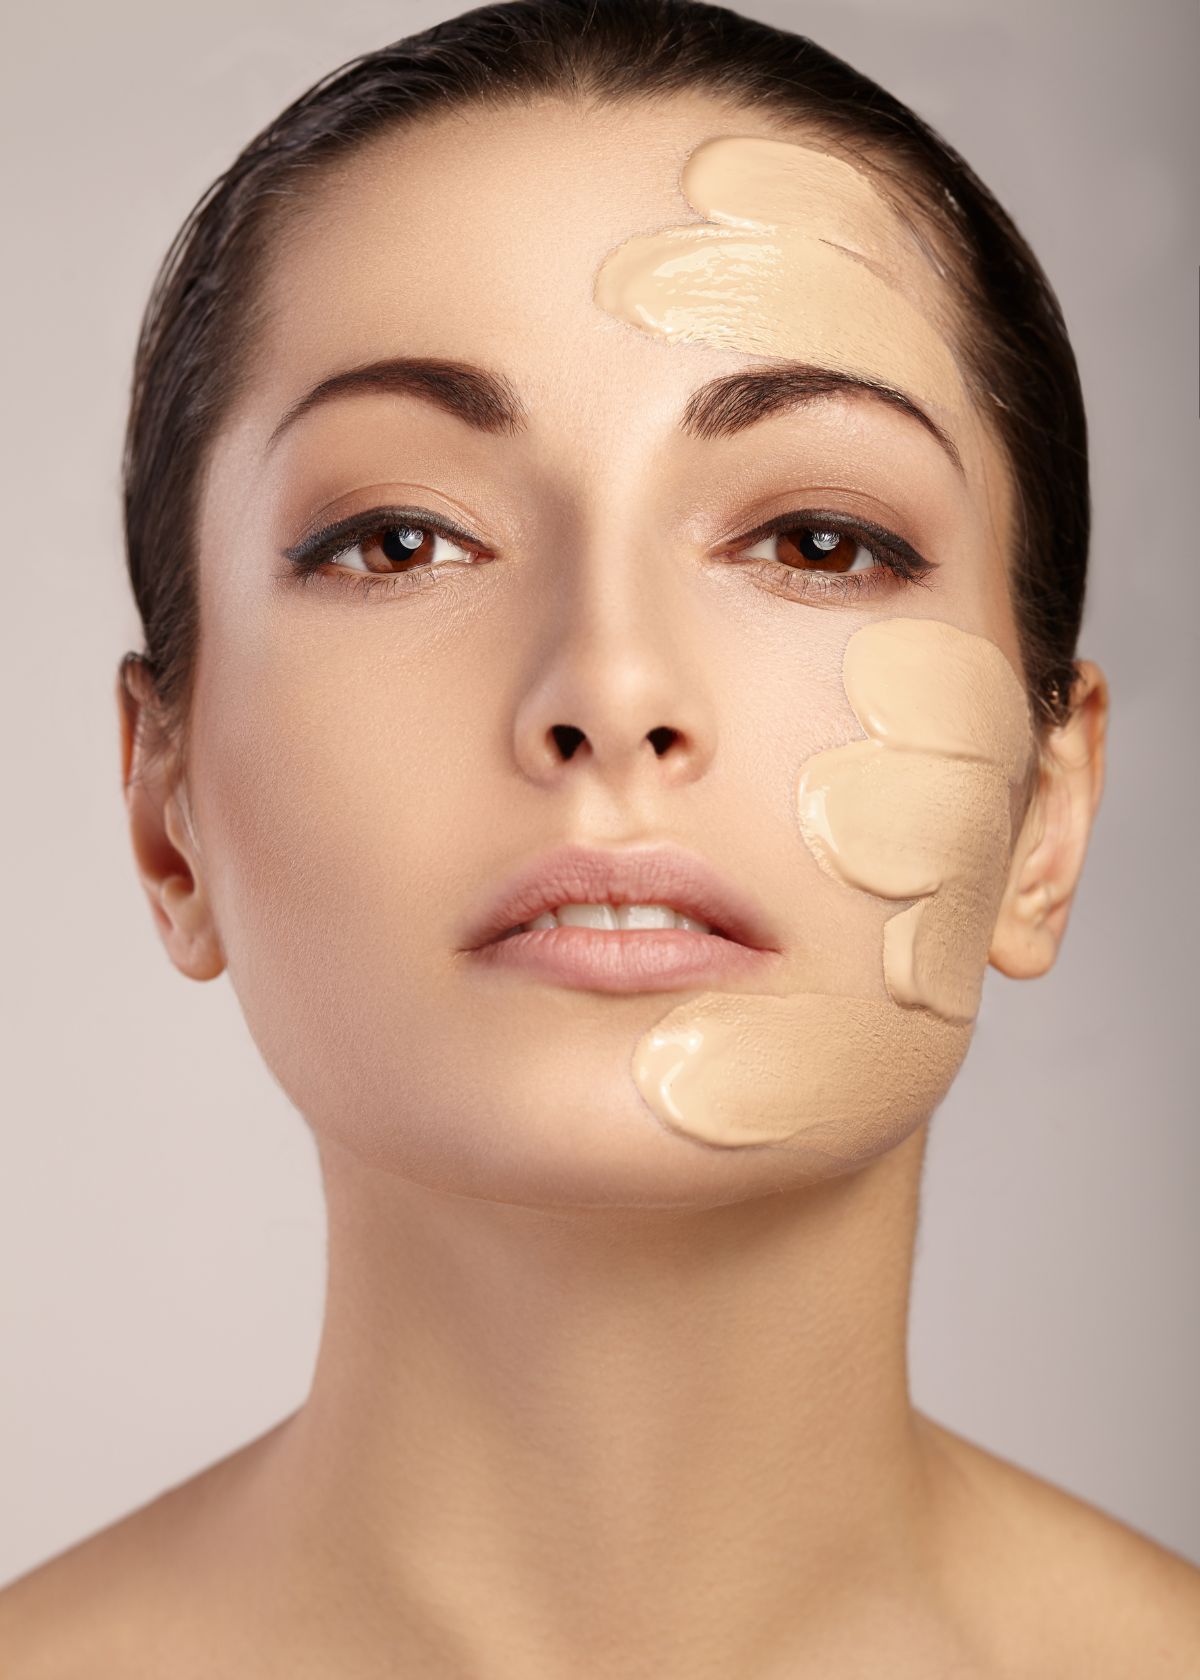 5 Best Foundation for Textured Skin: No Uneven Skin Tone